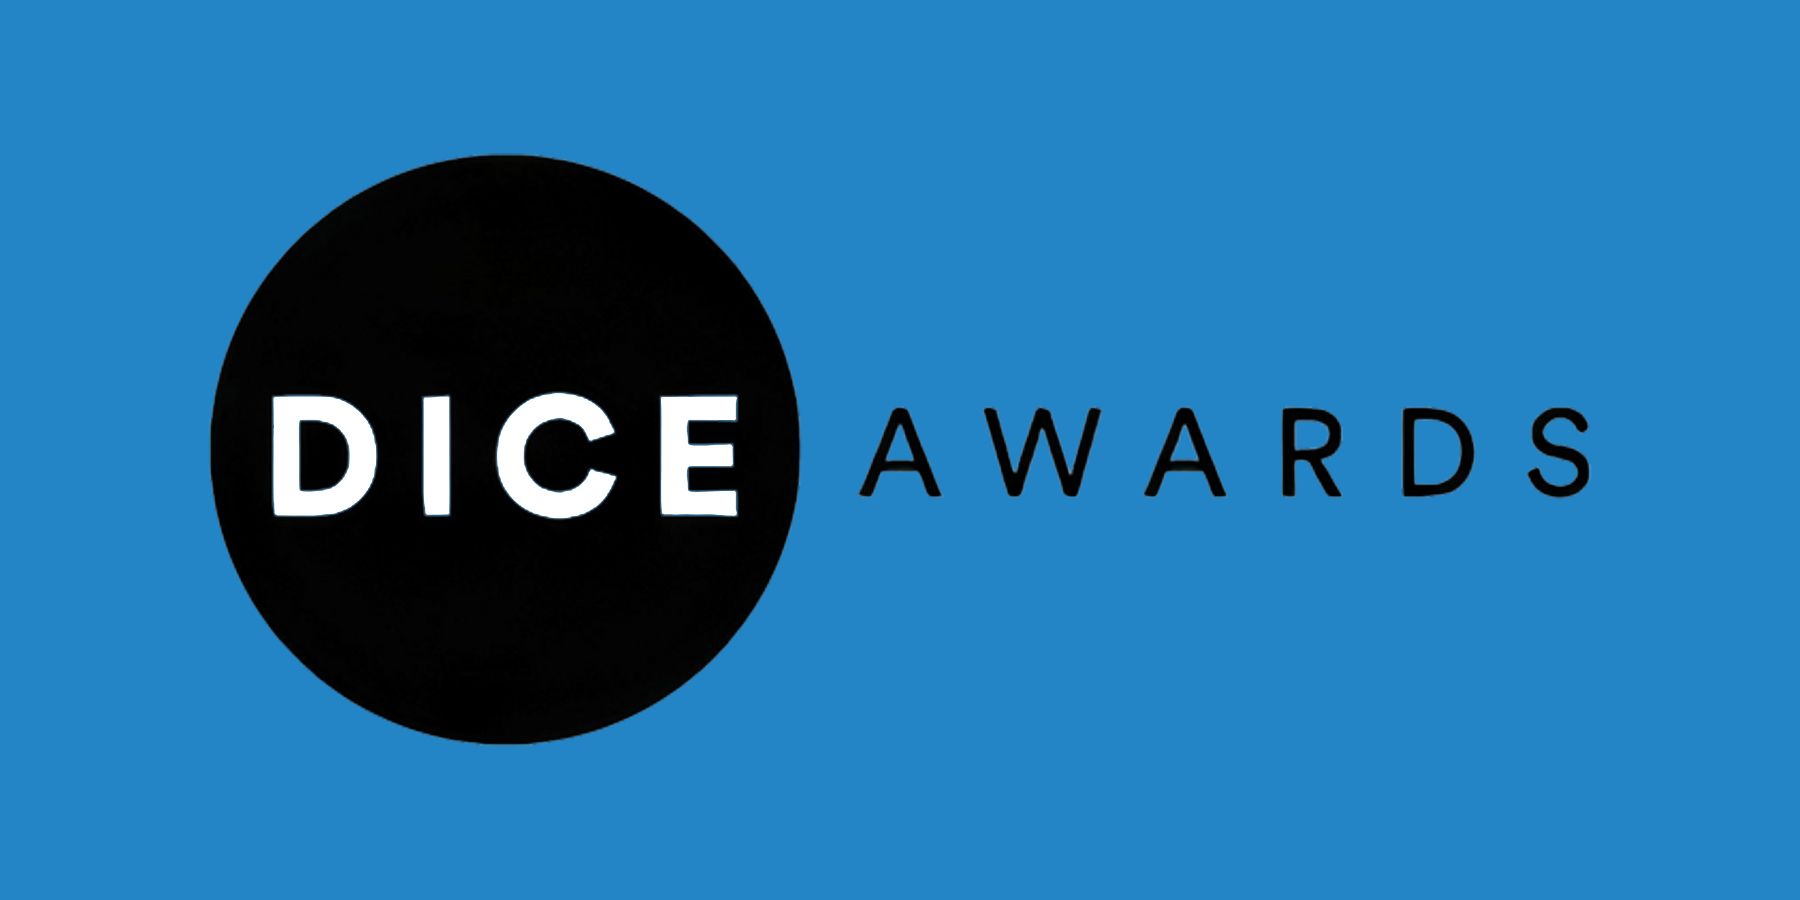 Dice Awards Logo